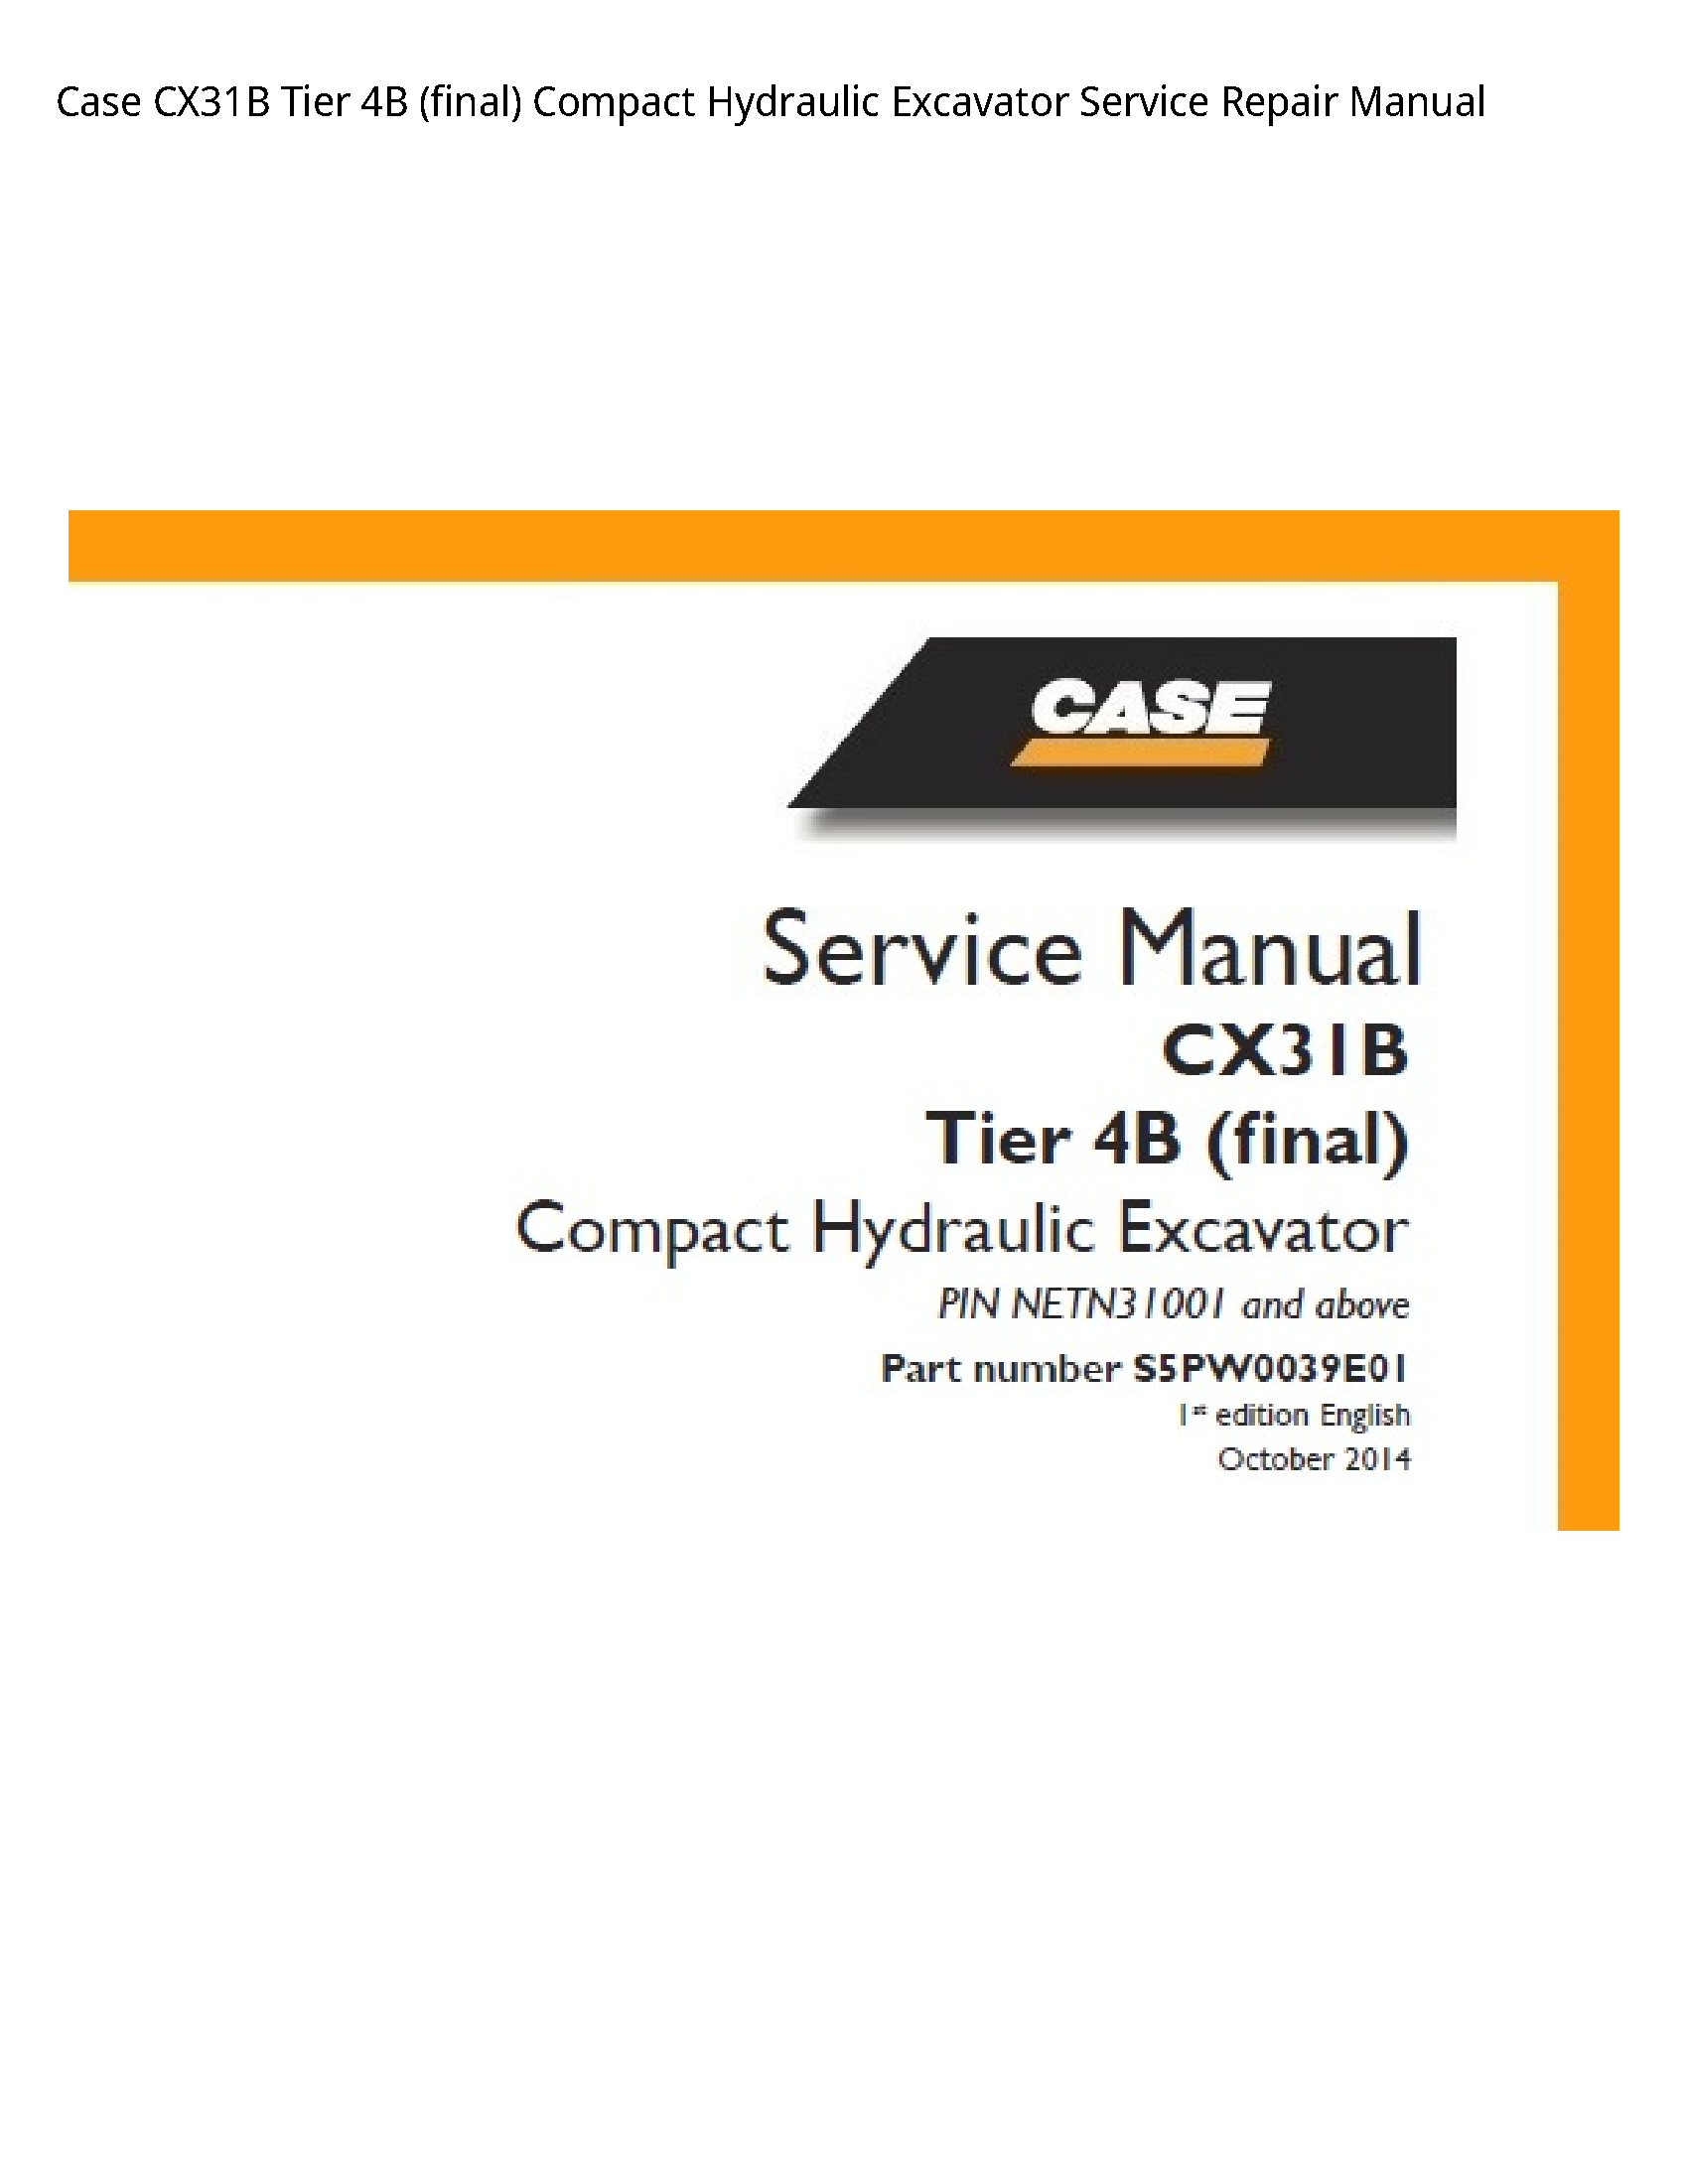 Case/Case IH CX31B Tier (final) Compact Hydraulic Excavator manual